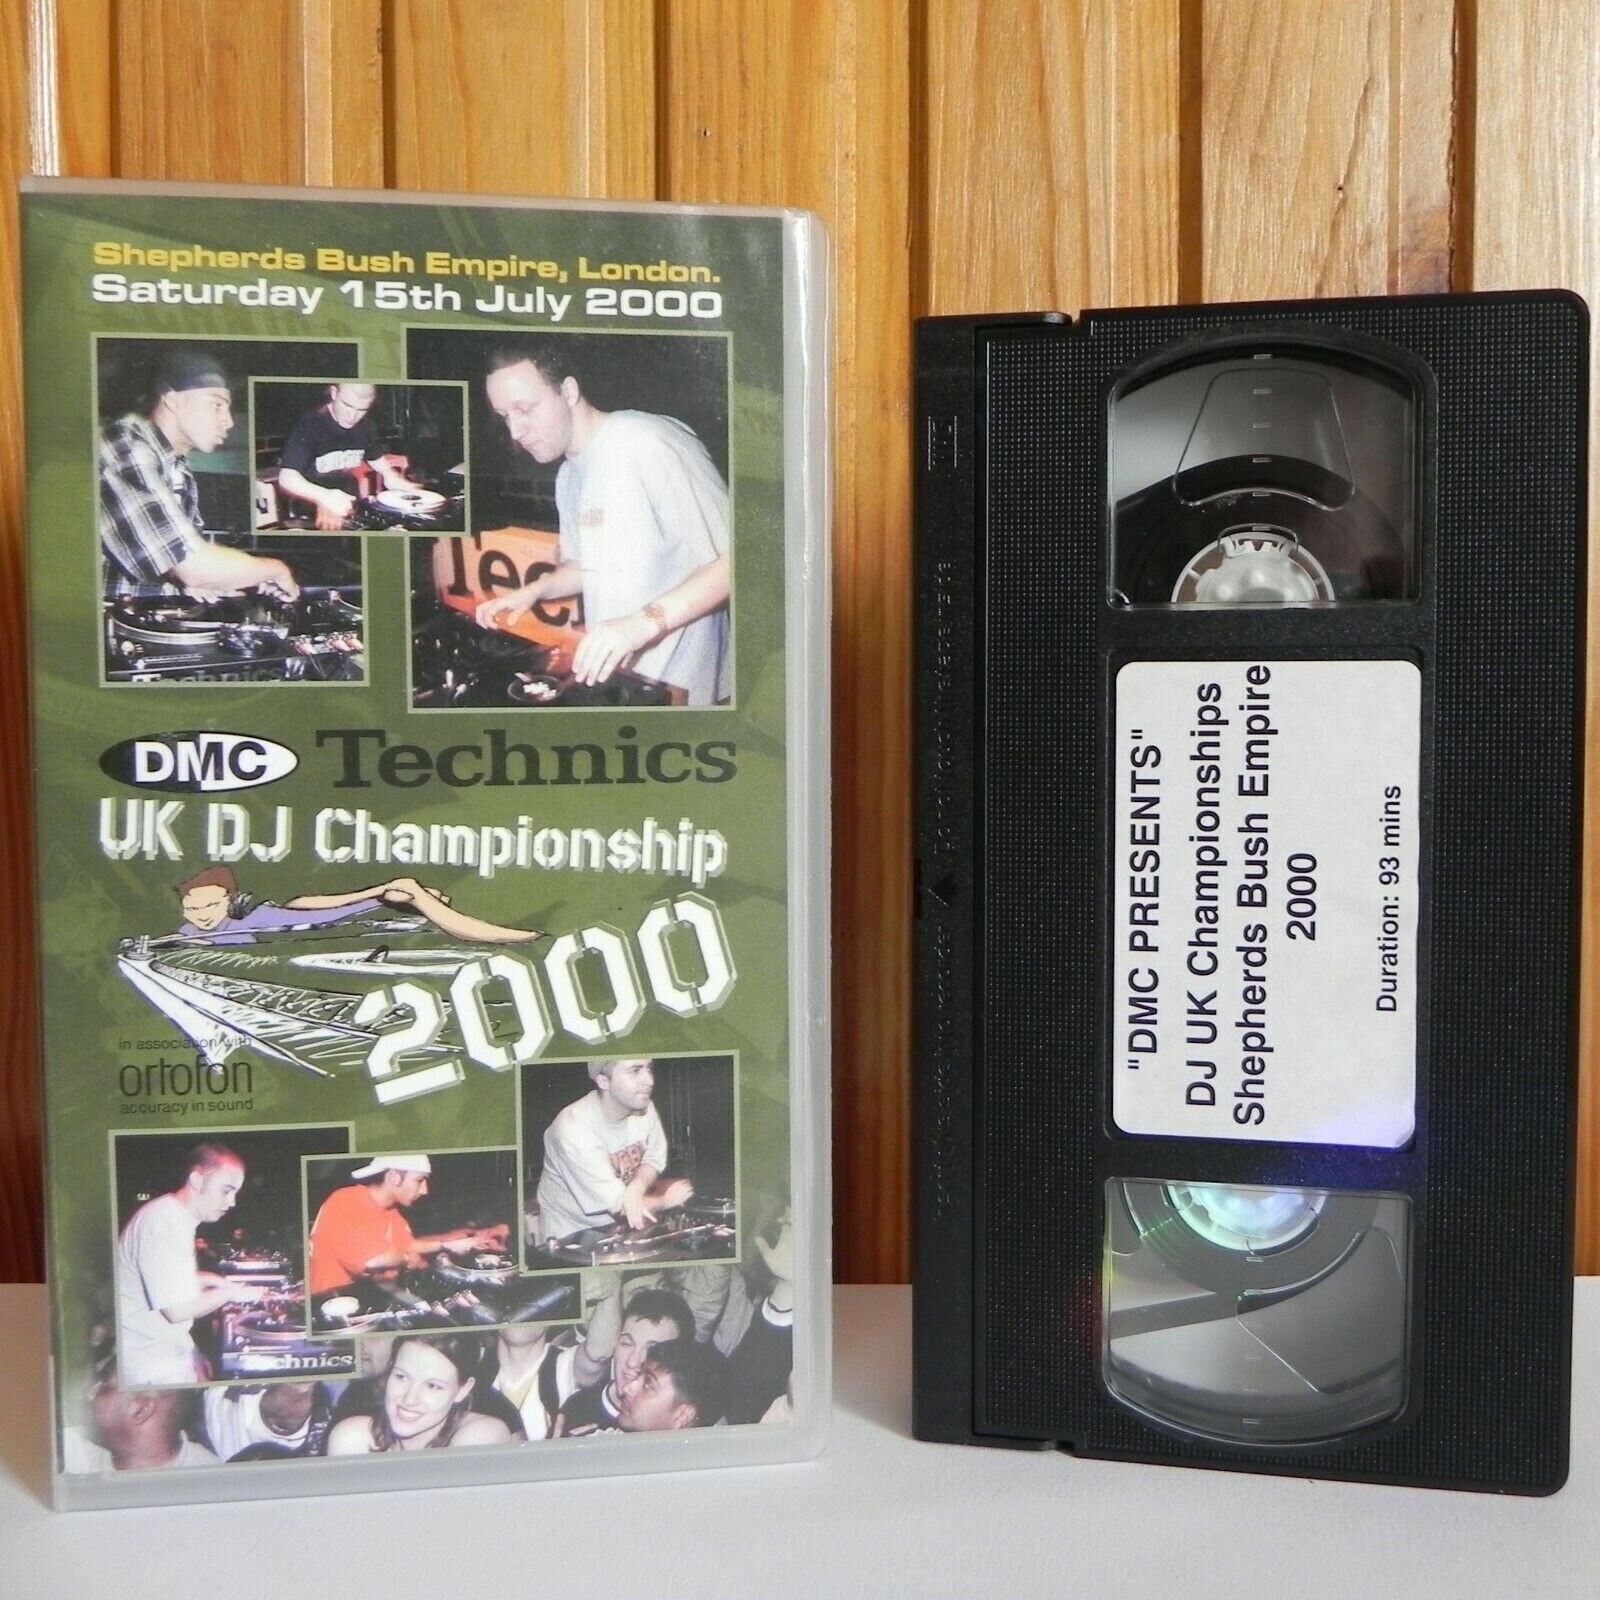 DMC Technics UK DJ Champioship 2000 - 15th July - Shepherds Bush Empire - VHS-